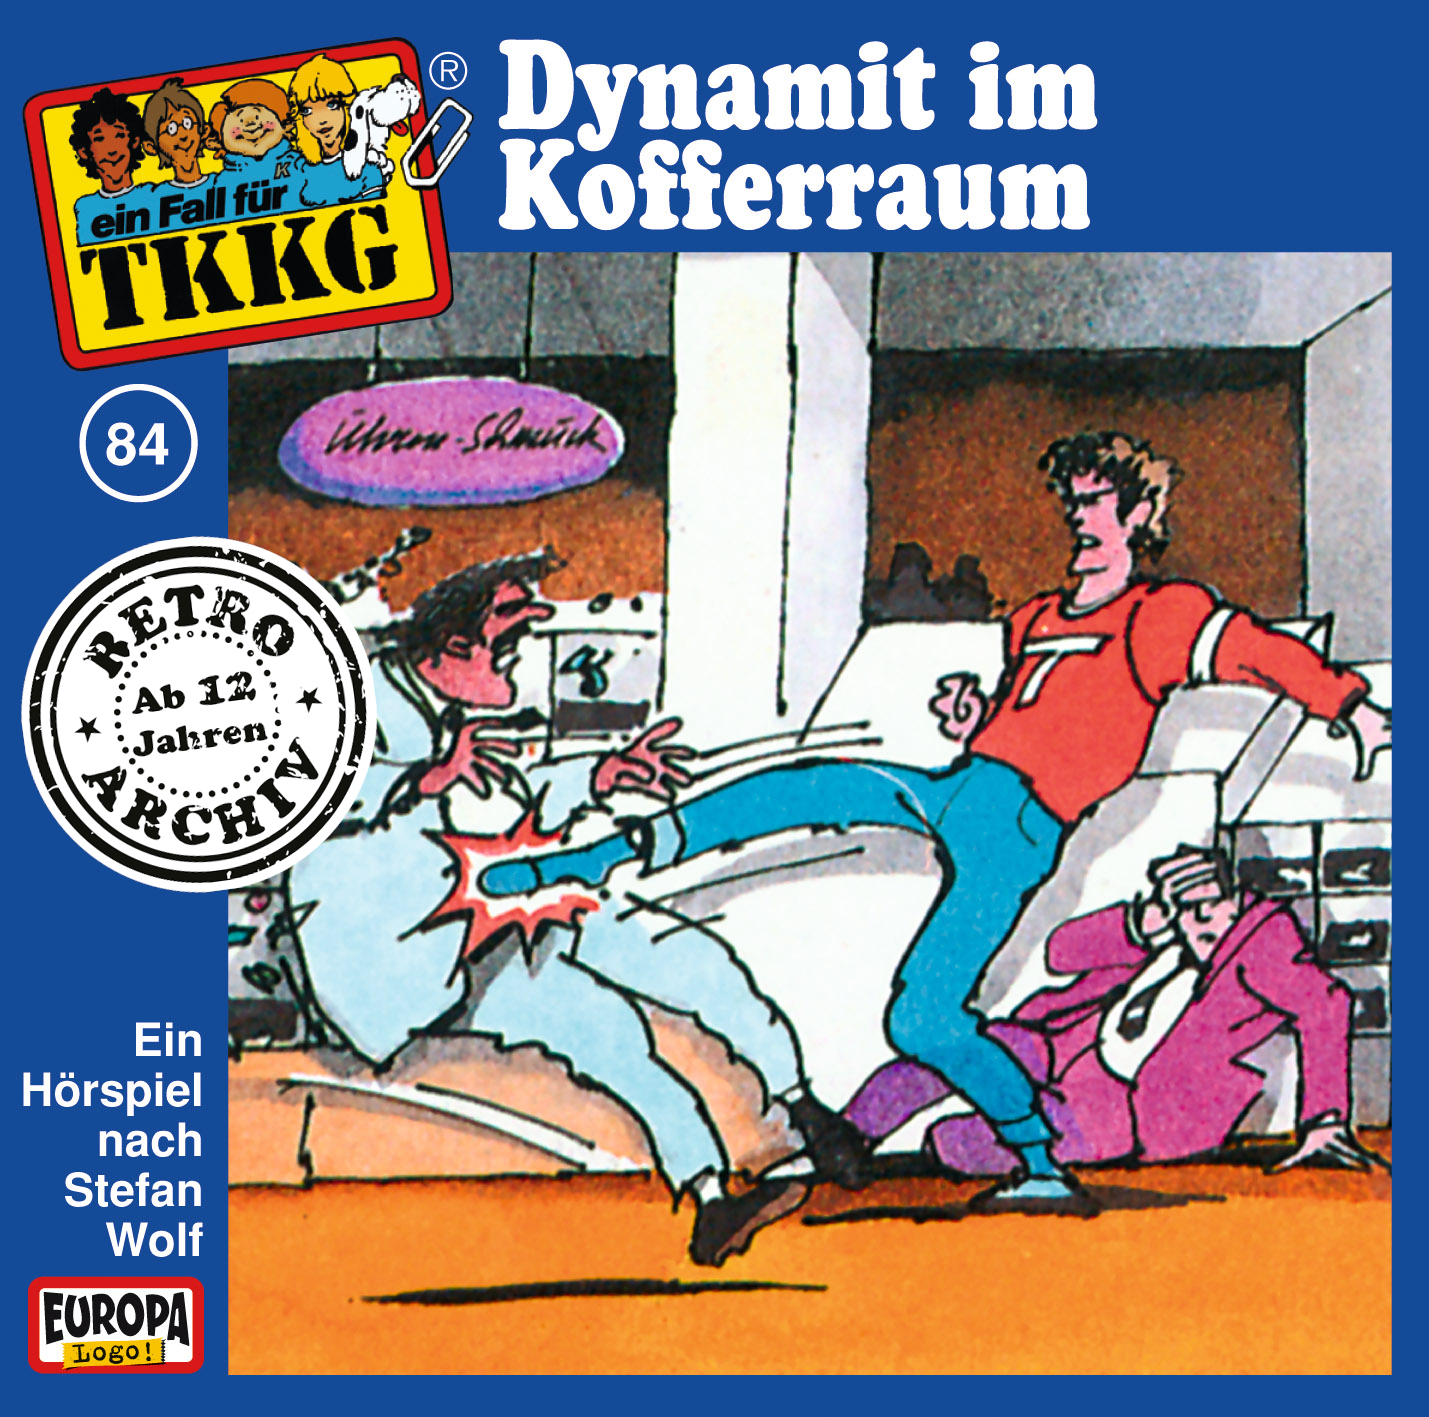 TKKG Retro-Archiv: Dynamit im Kofferraum